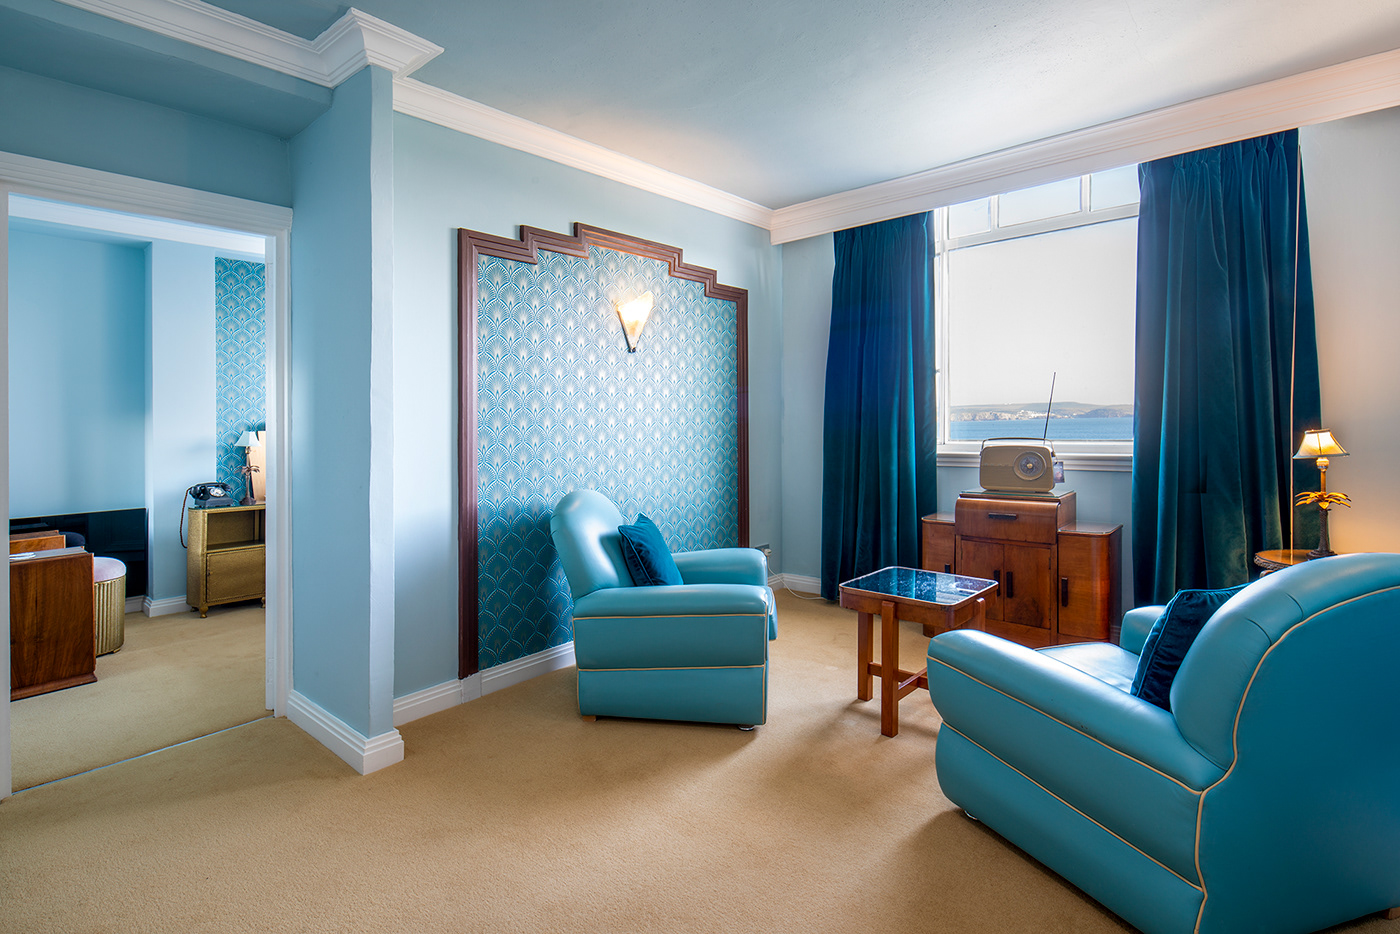 1930's agather christie art deco Bedrooms Burgh Island devon Hospitality hotel interiors refurbish